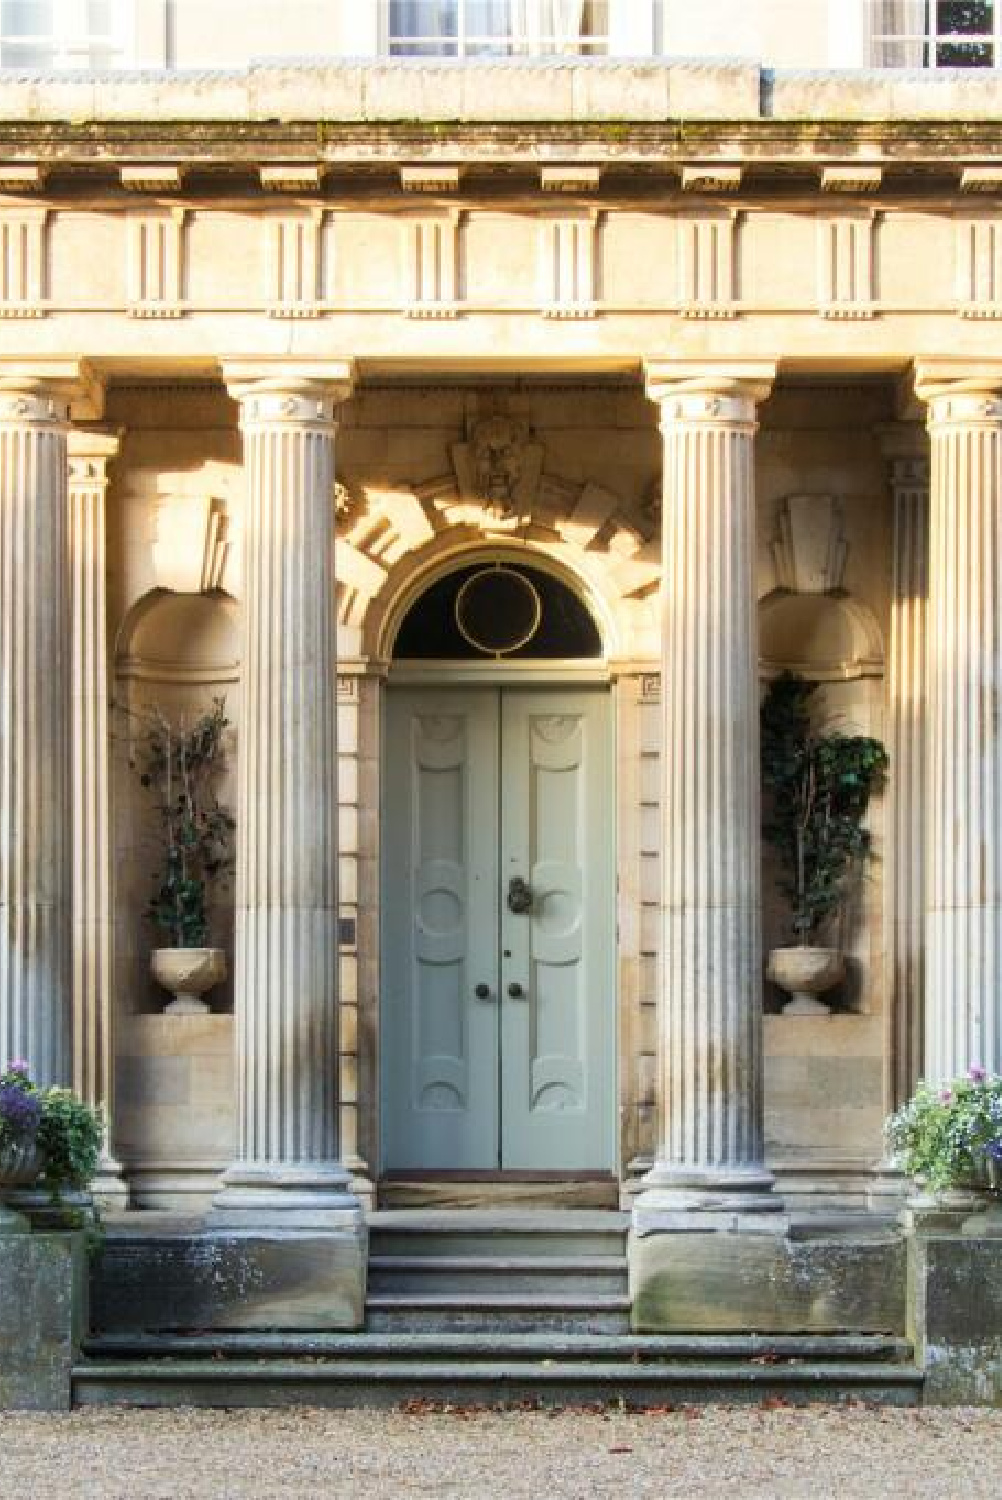 Ashlar stone façade and porch columns at Barn Hill House (historic Georgian built in 1698 in Stamford, UK). #georgianarchitecture #historichomes #barnhillhouse